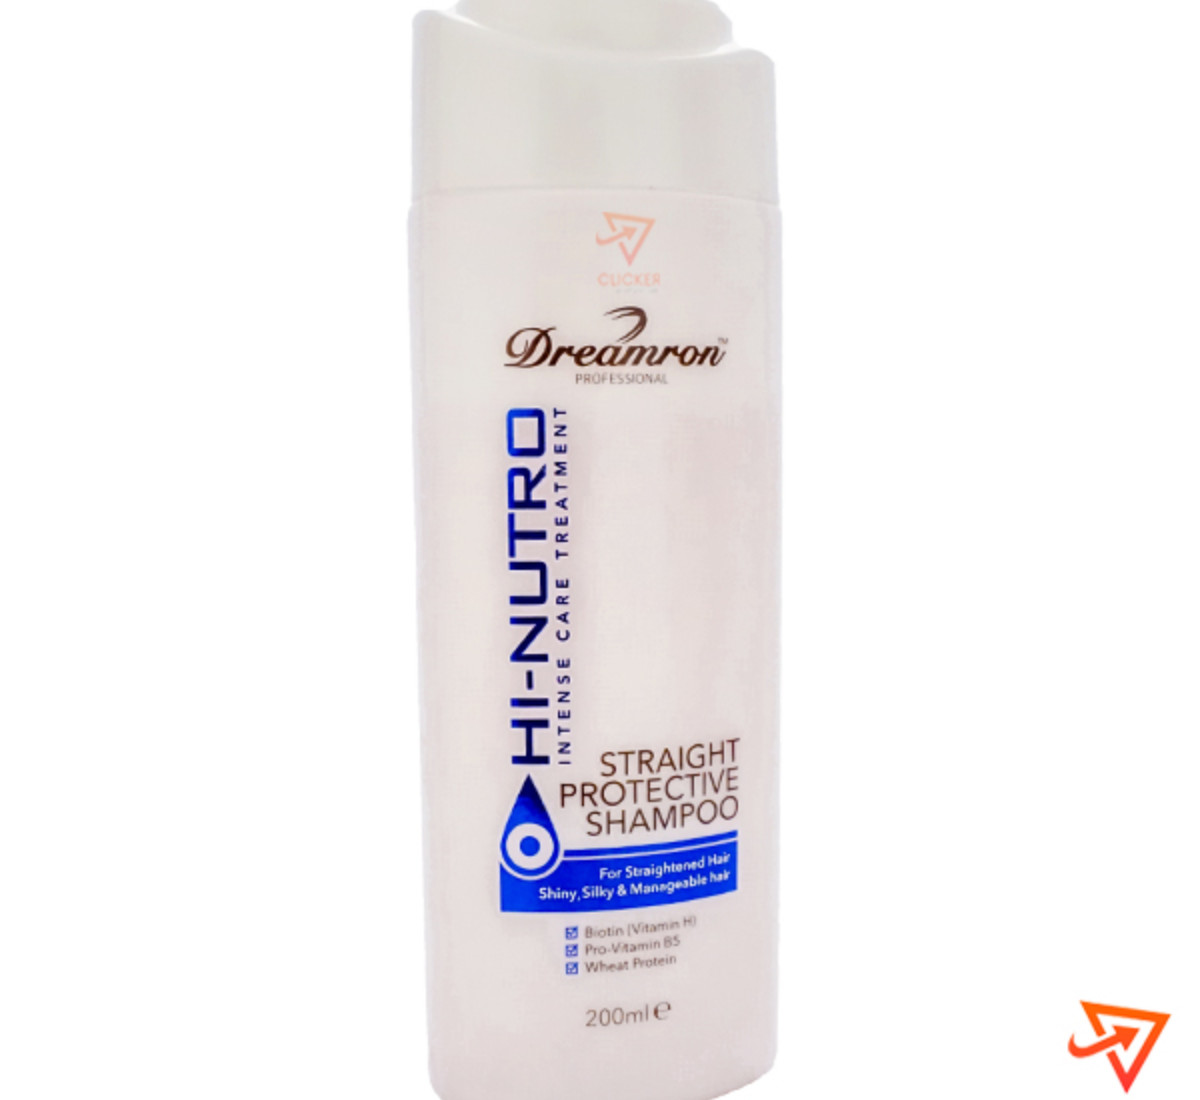 Clicker product 200ml DREAMRON hi-nutro intense care treatment straight protect shampoo 1077